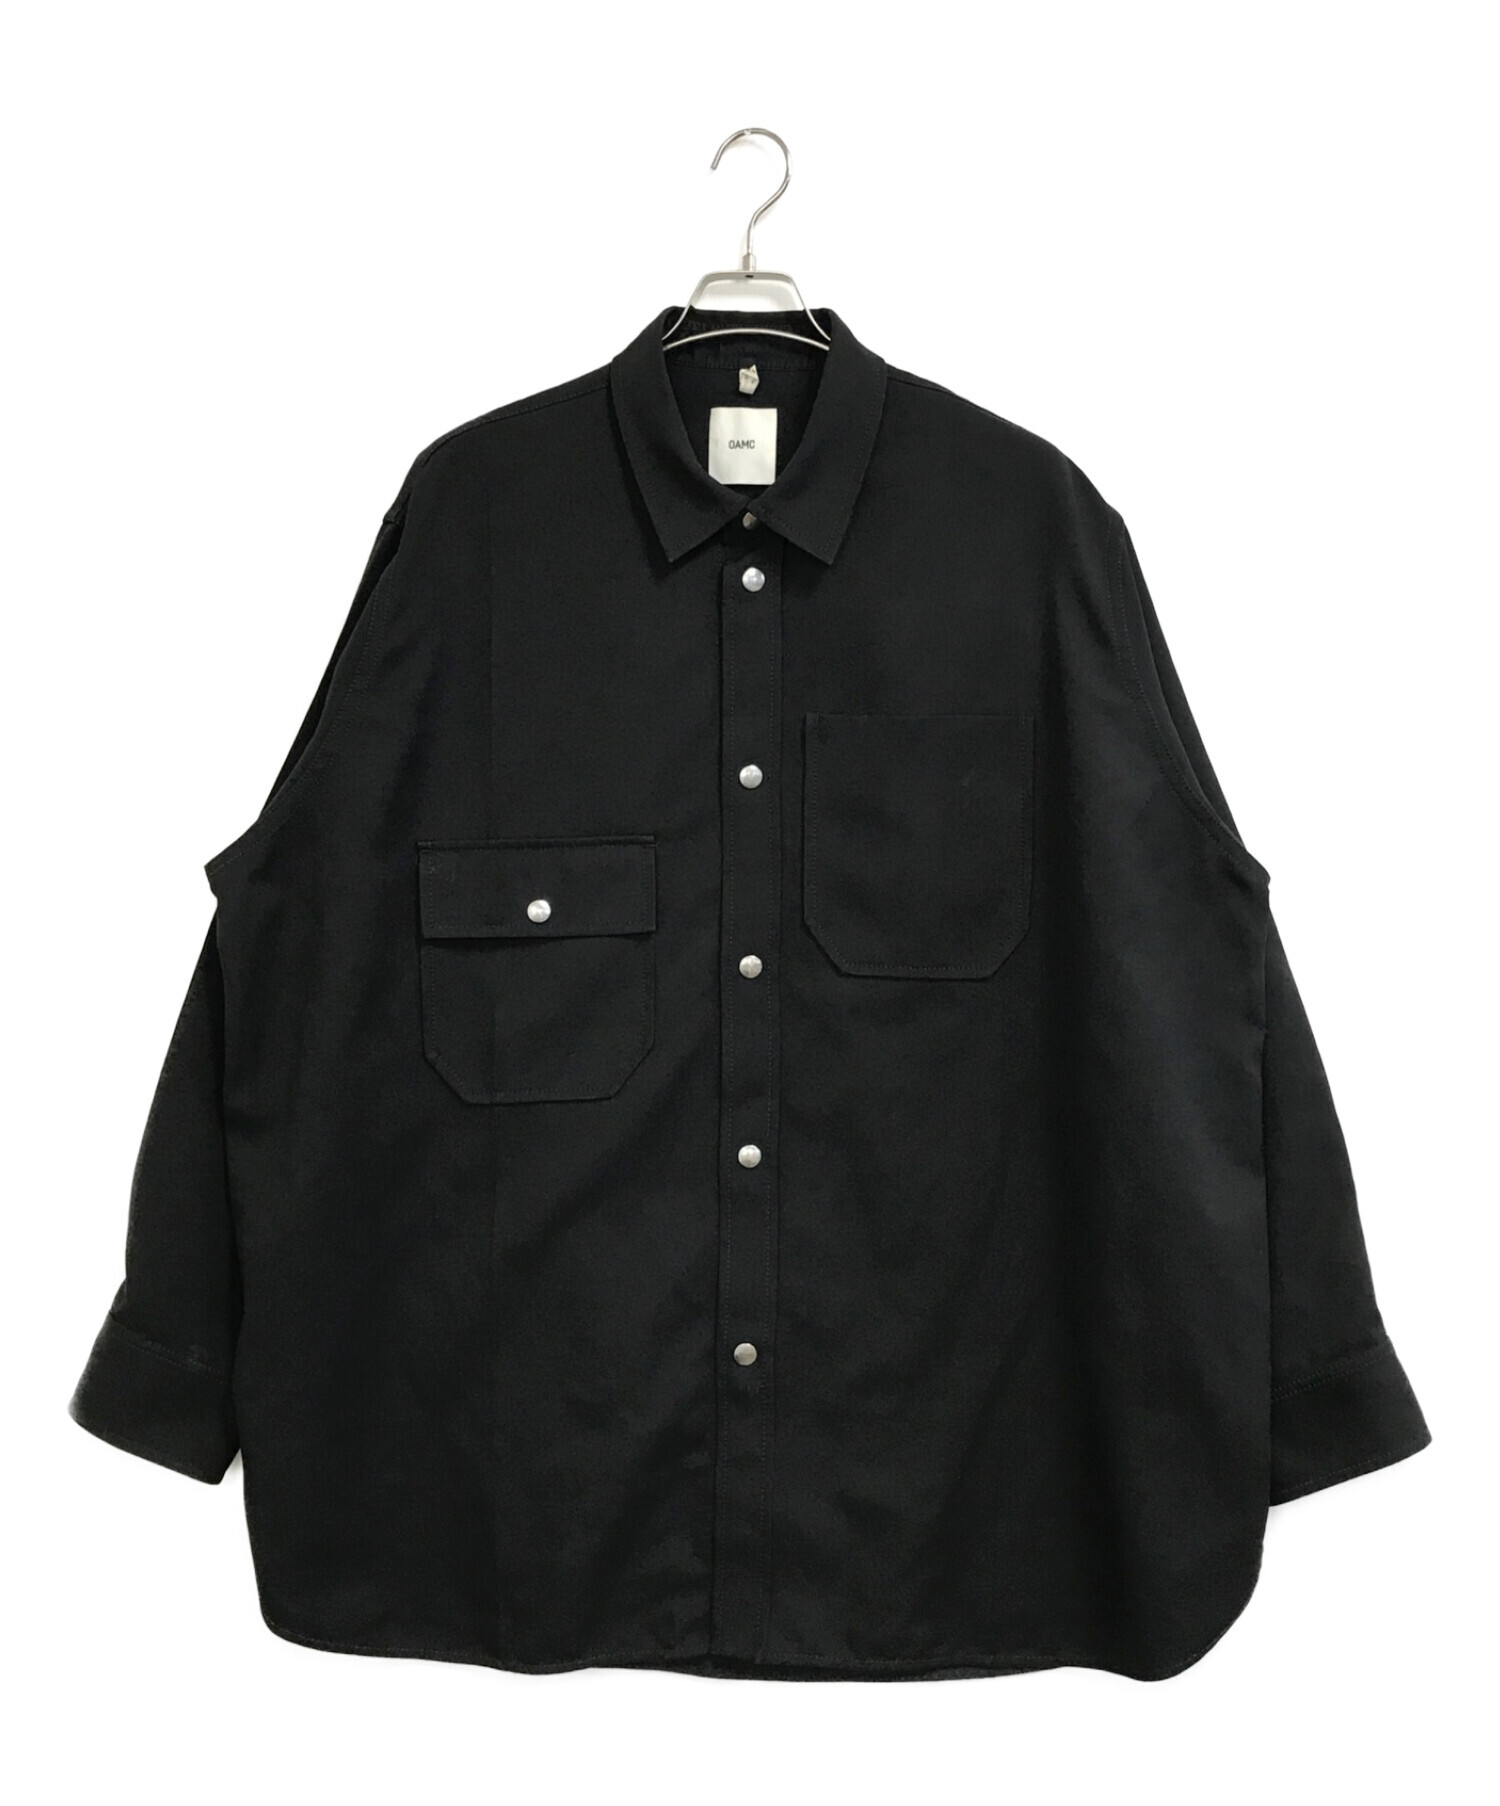 OAMC   シャツ　ブラック　XS